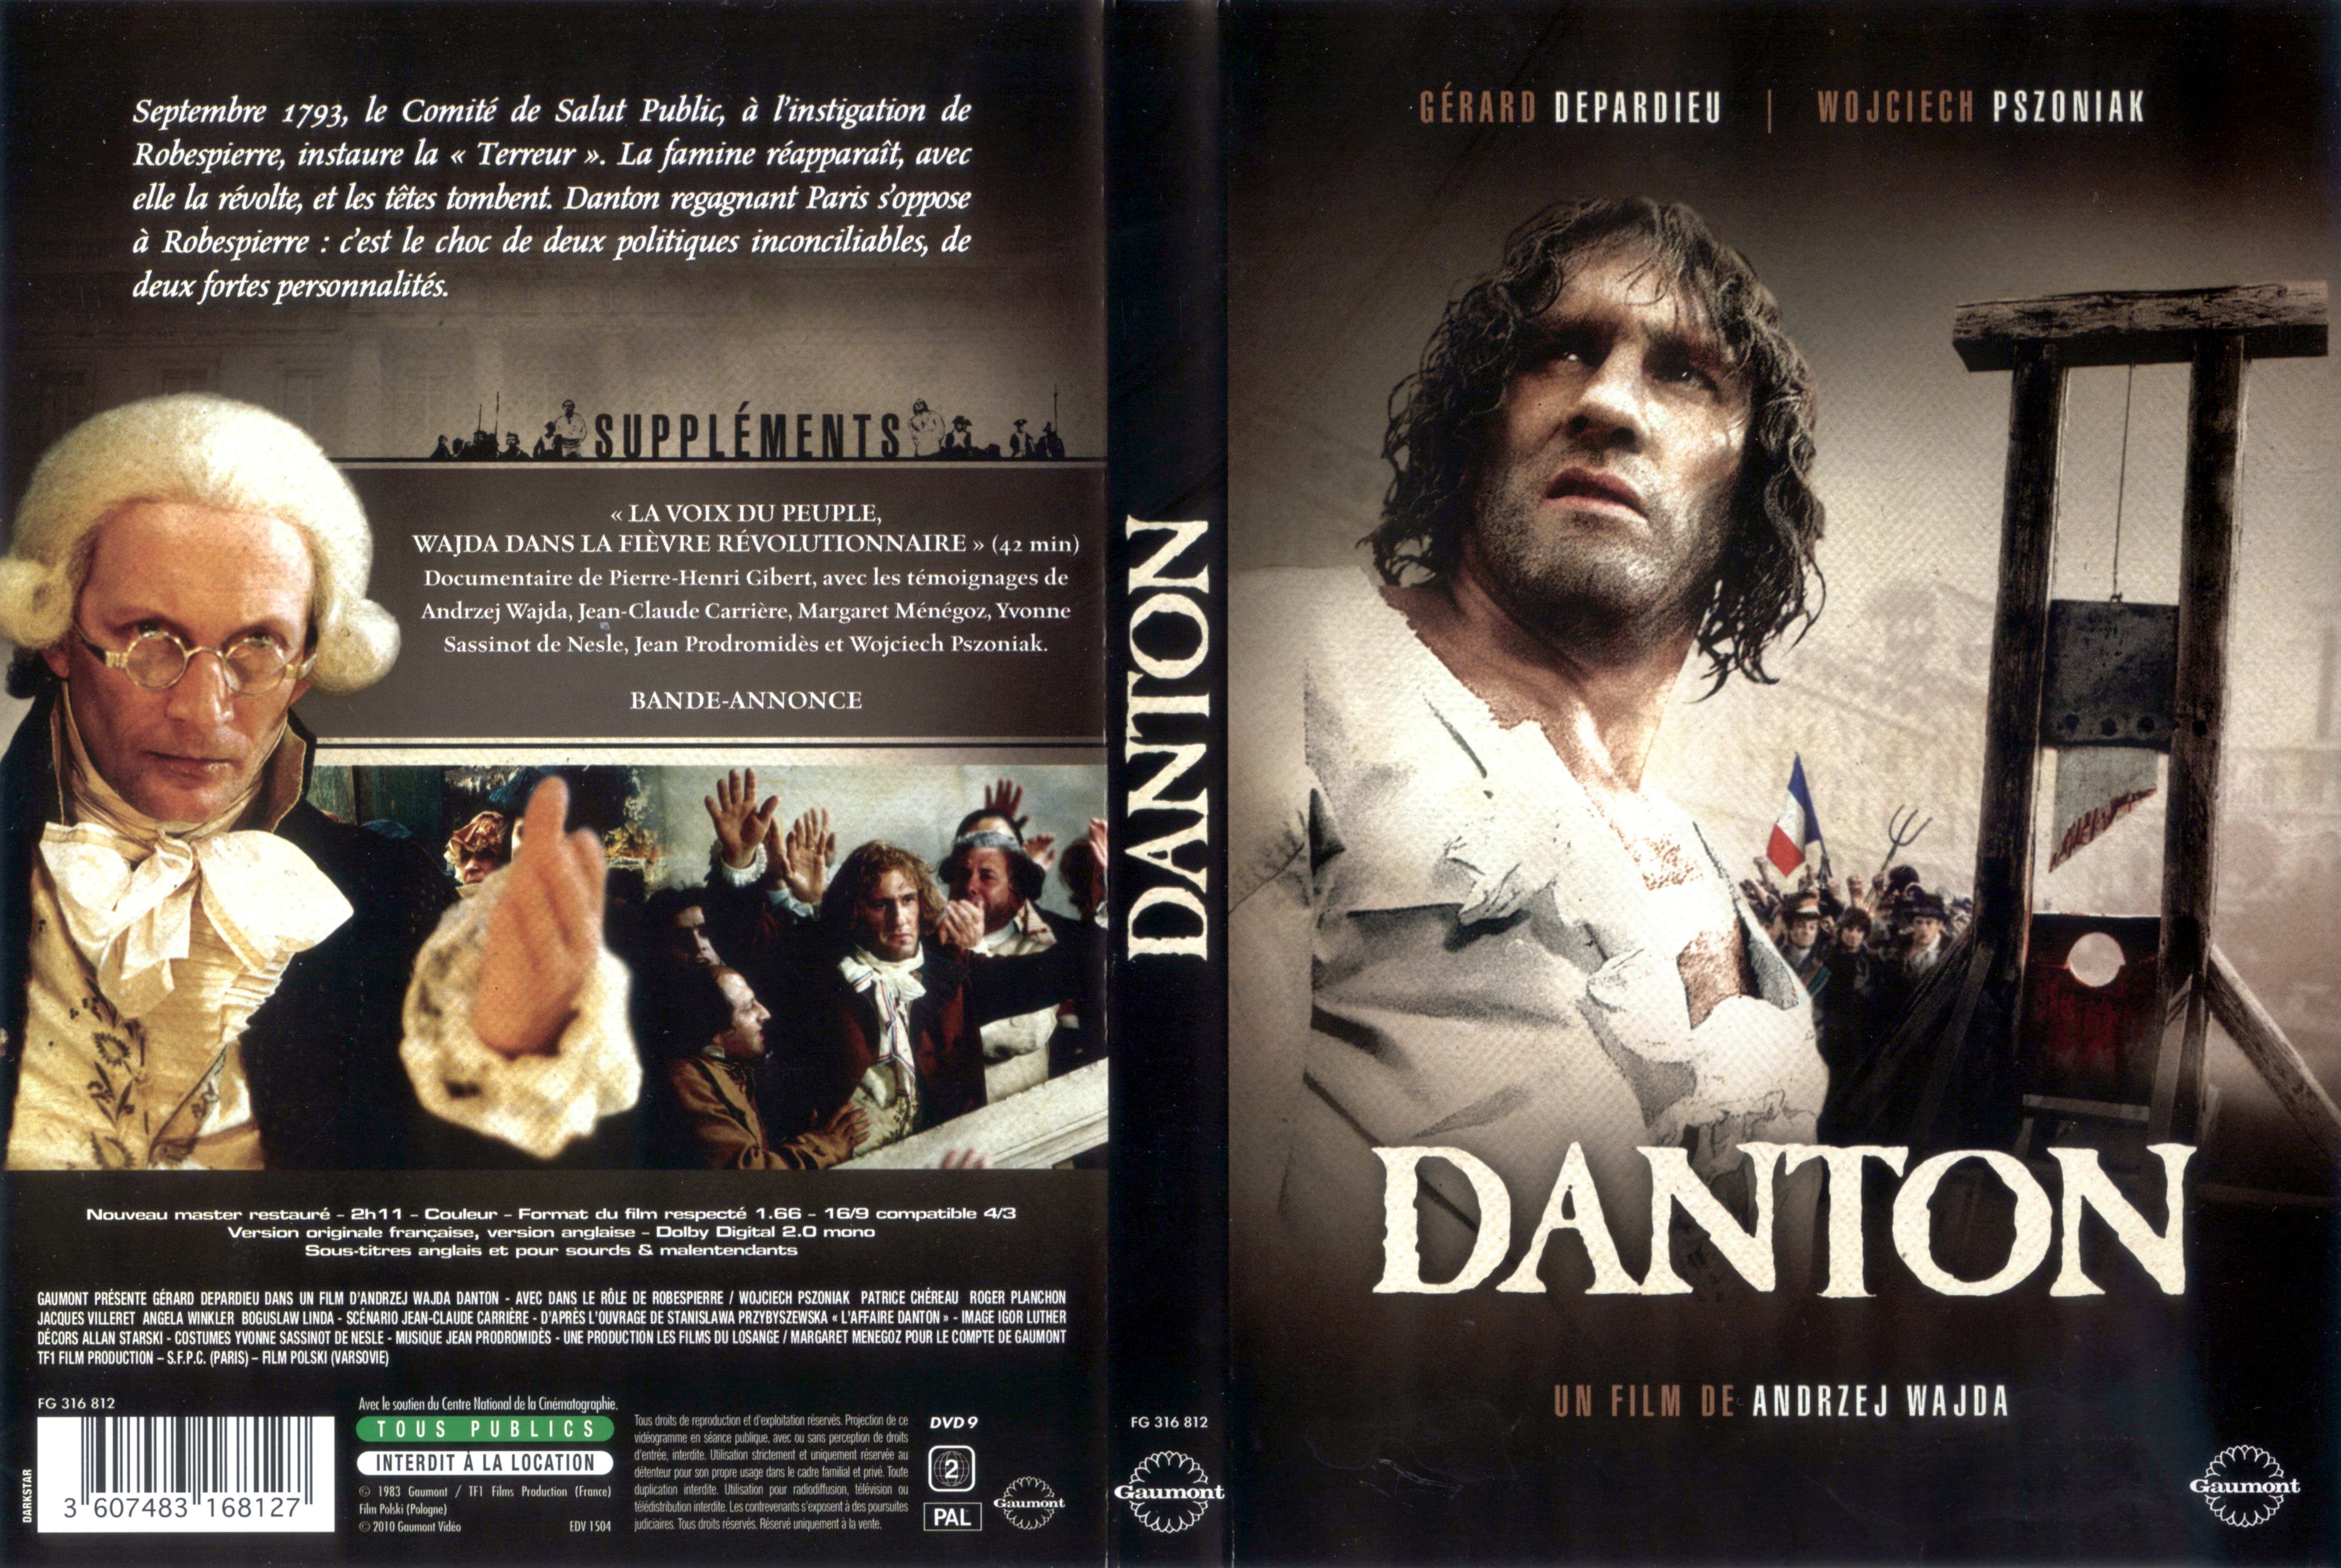 Jaquette DVD Danton v2